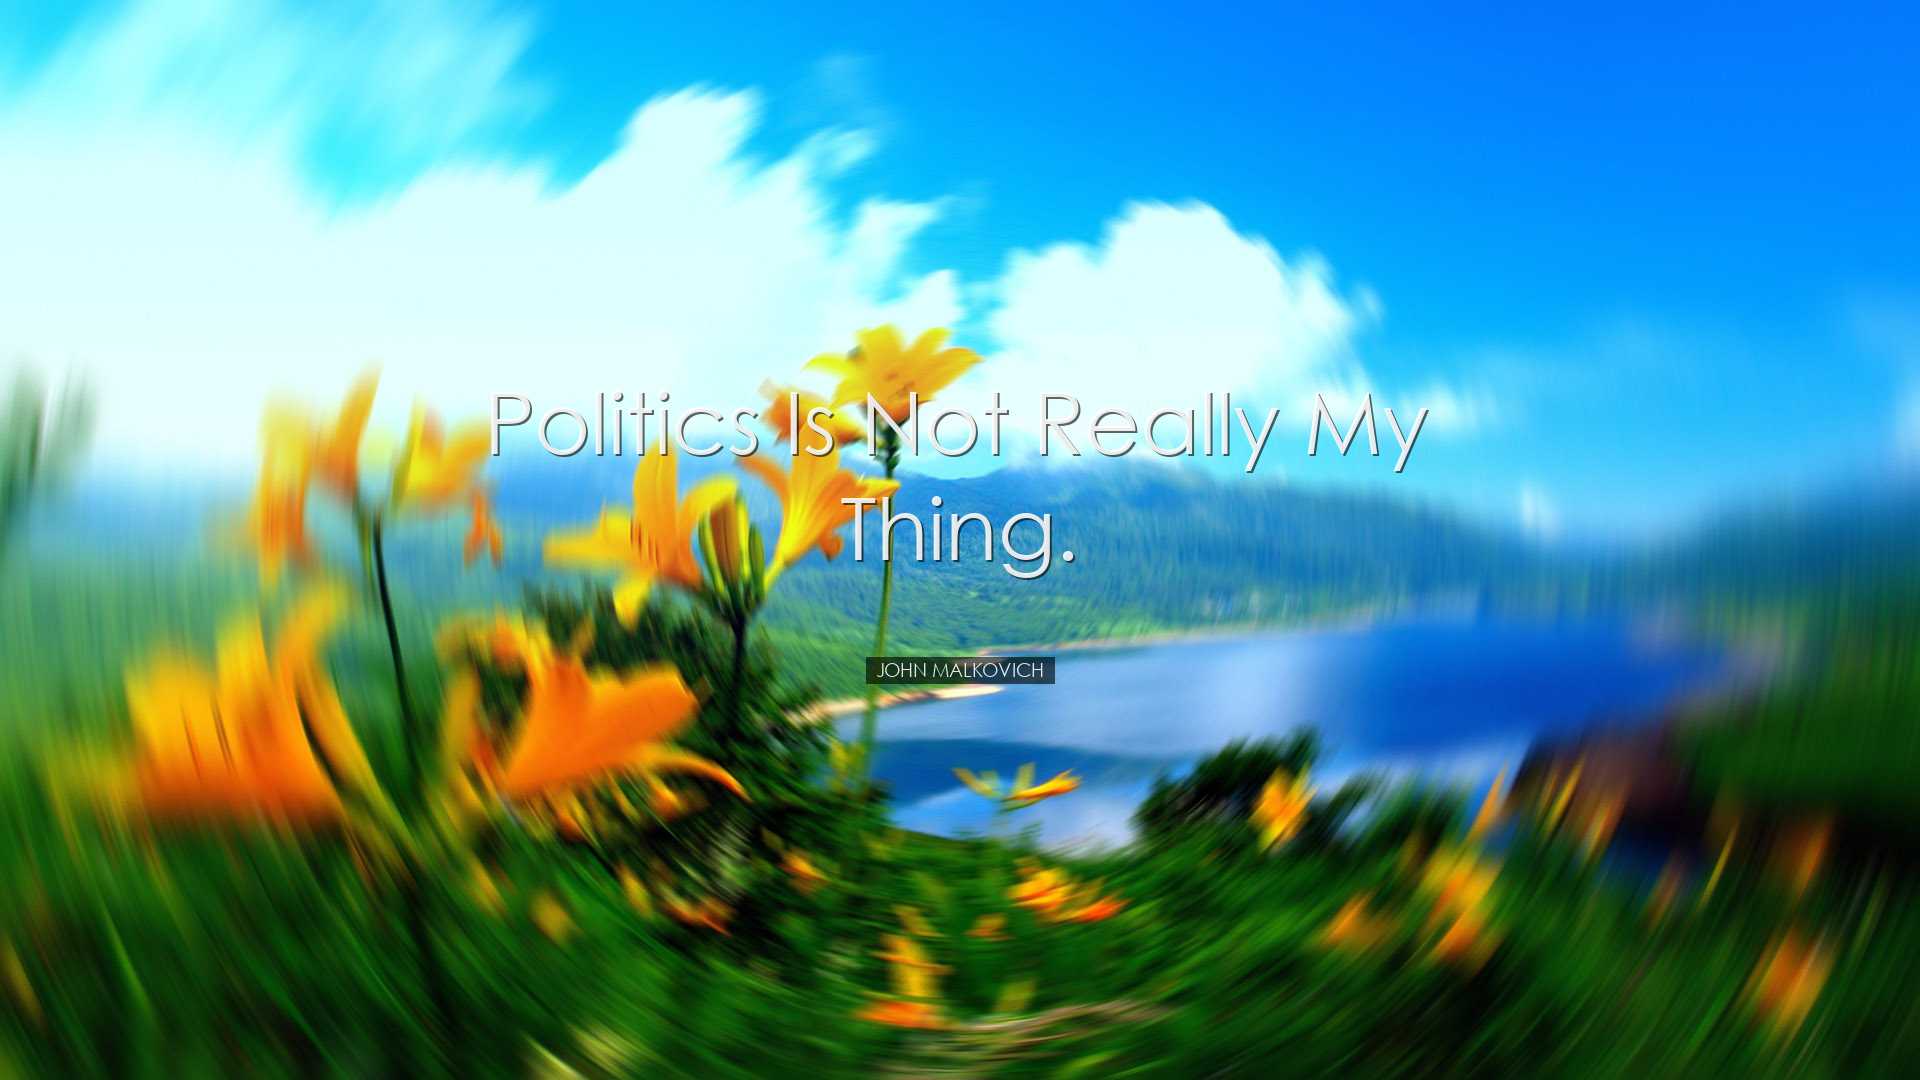 Politics is not really my thing. - John Malkovich